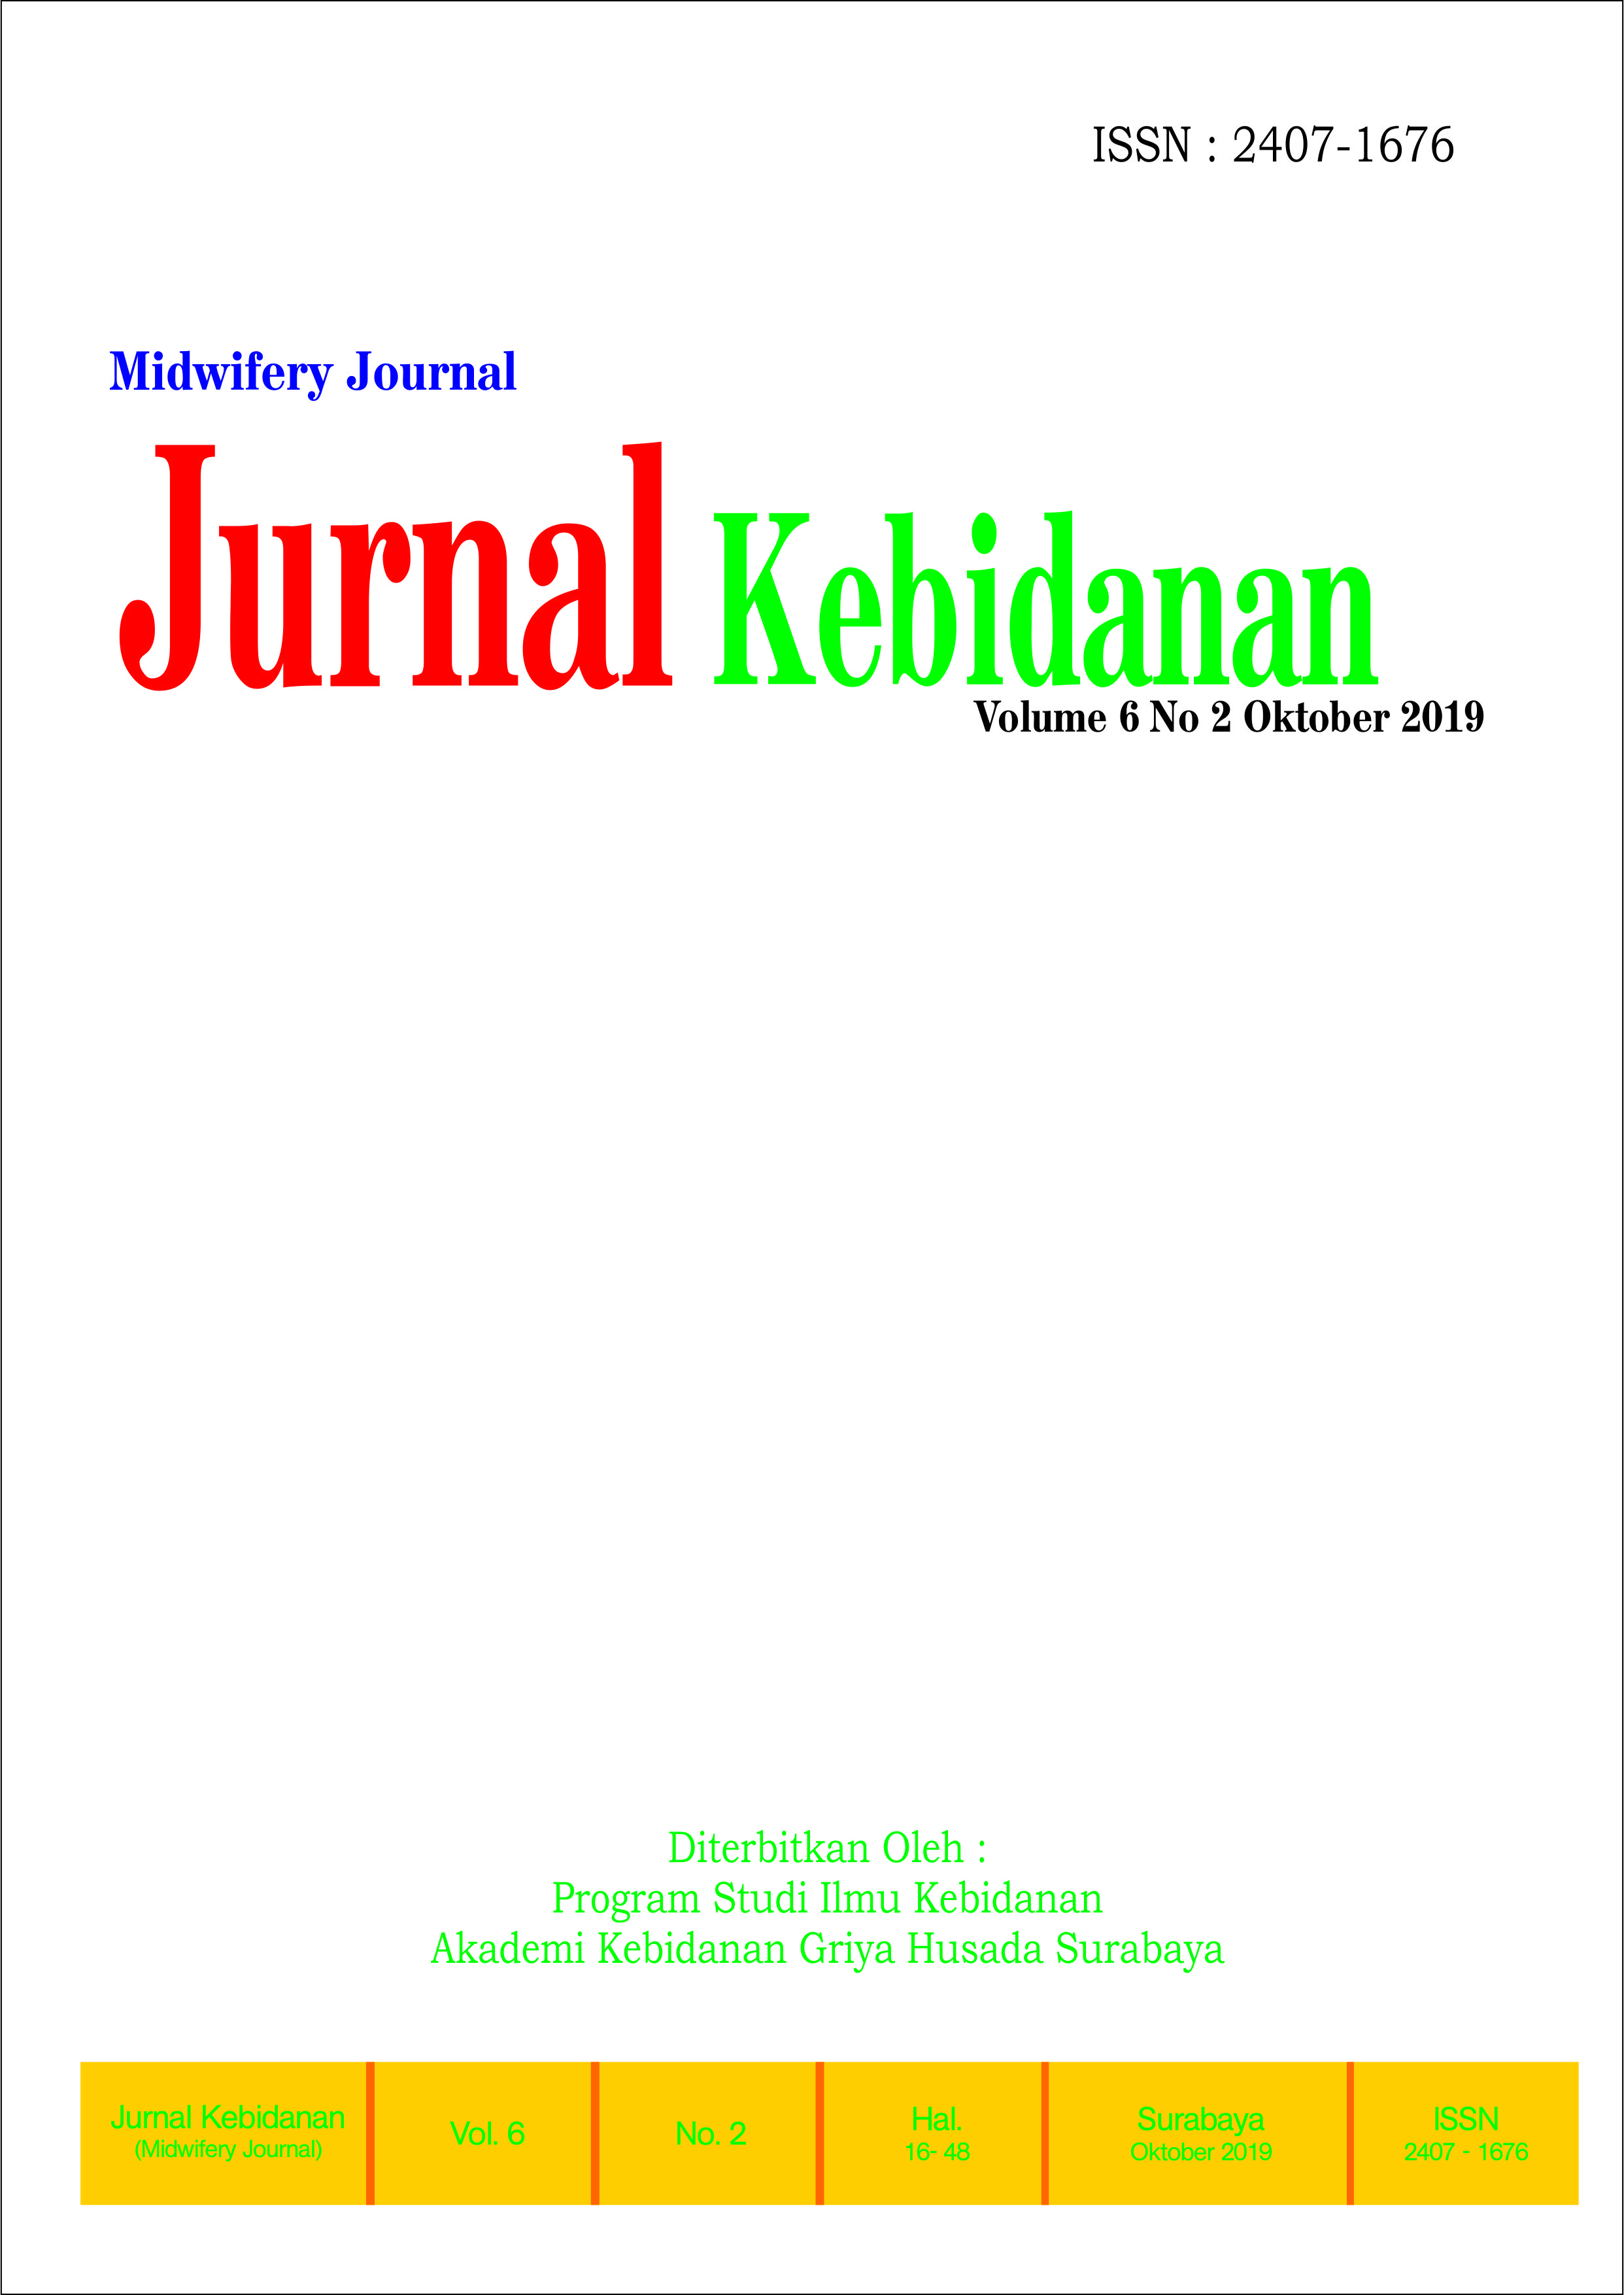 Midwifery Journal